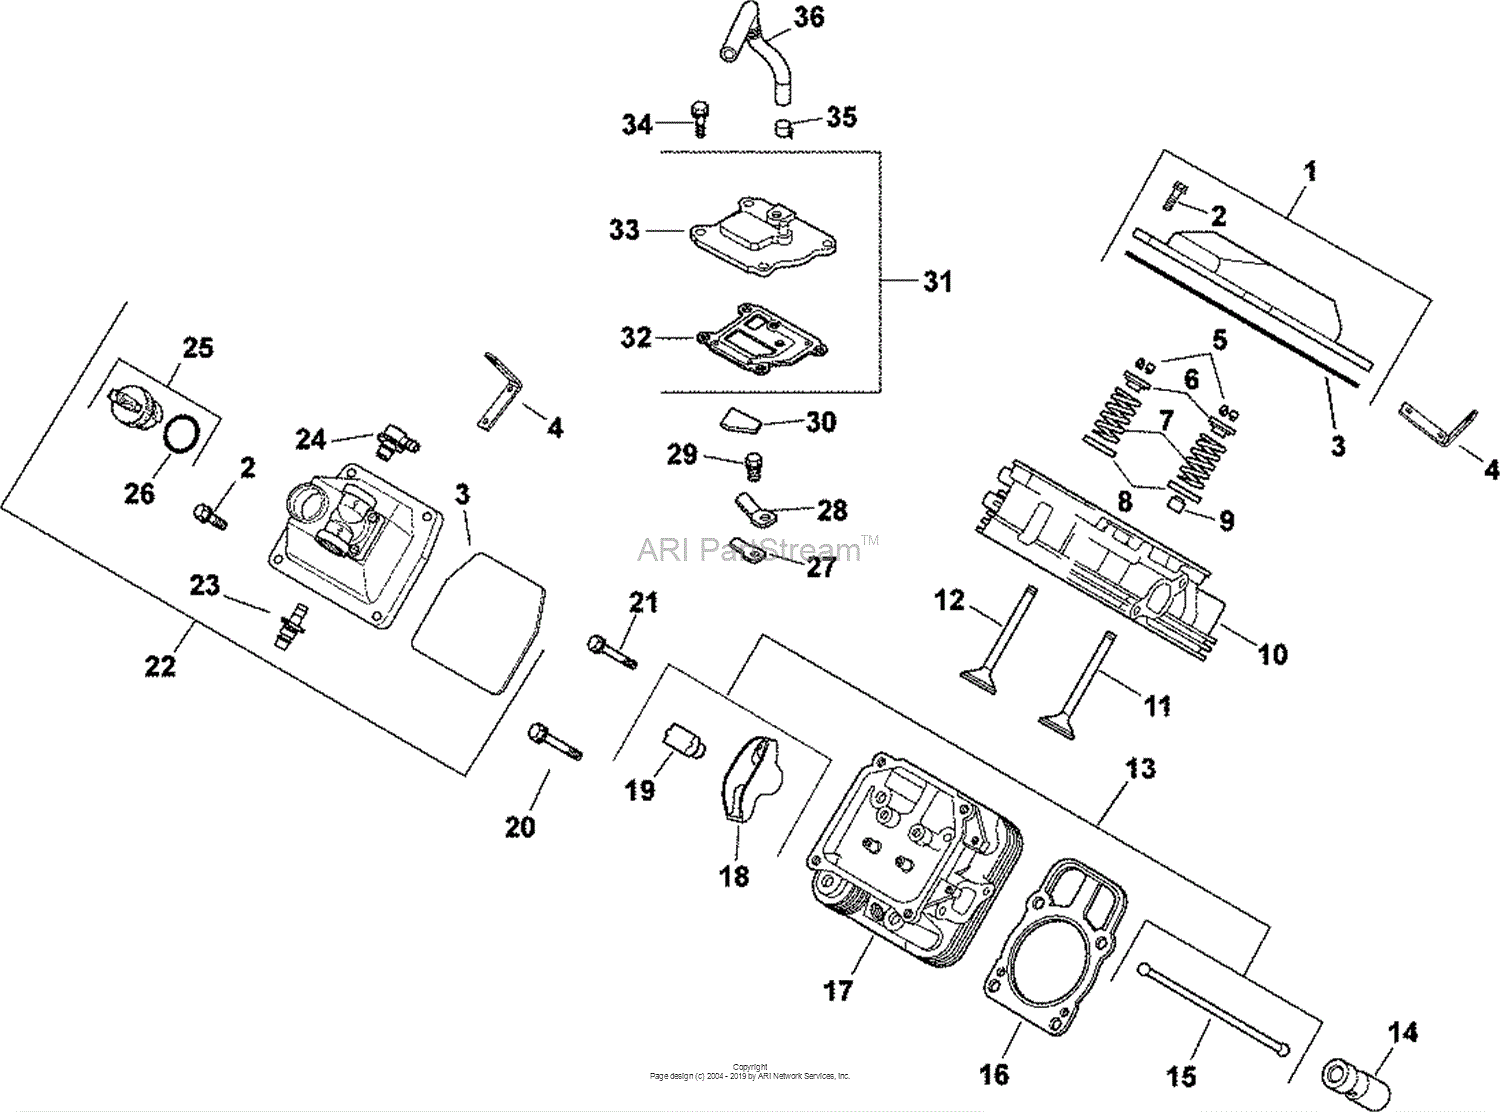 Gallery of Kohler Sv730 Parts Diagram.